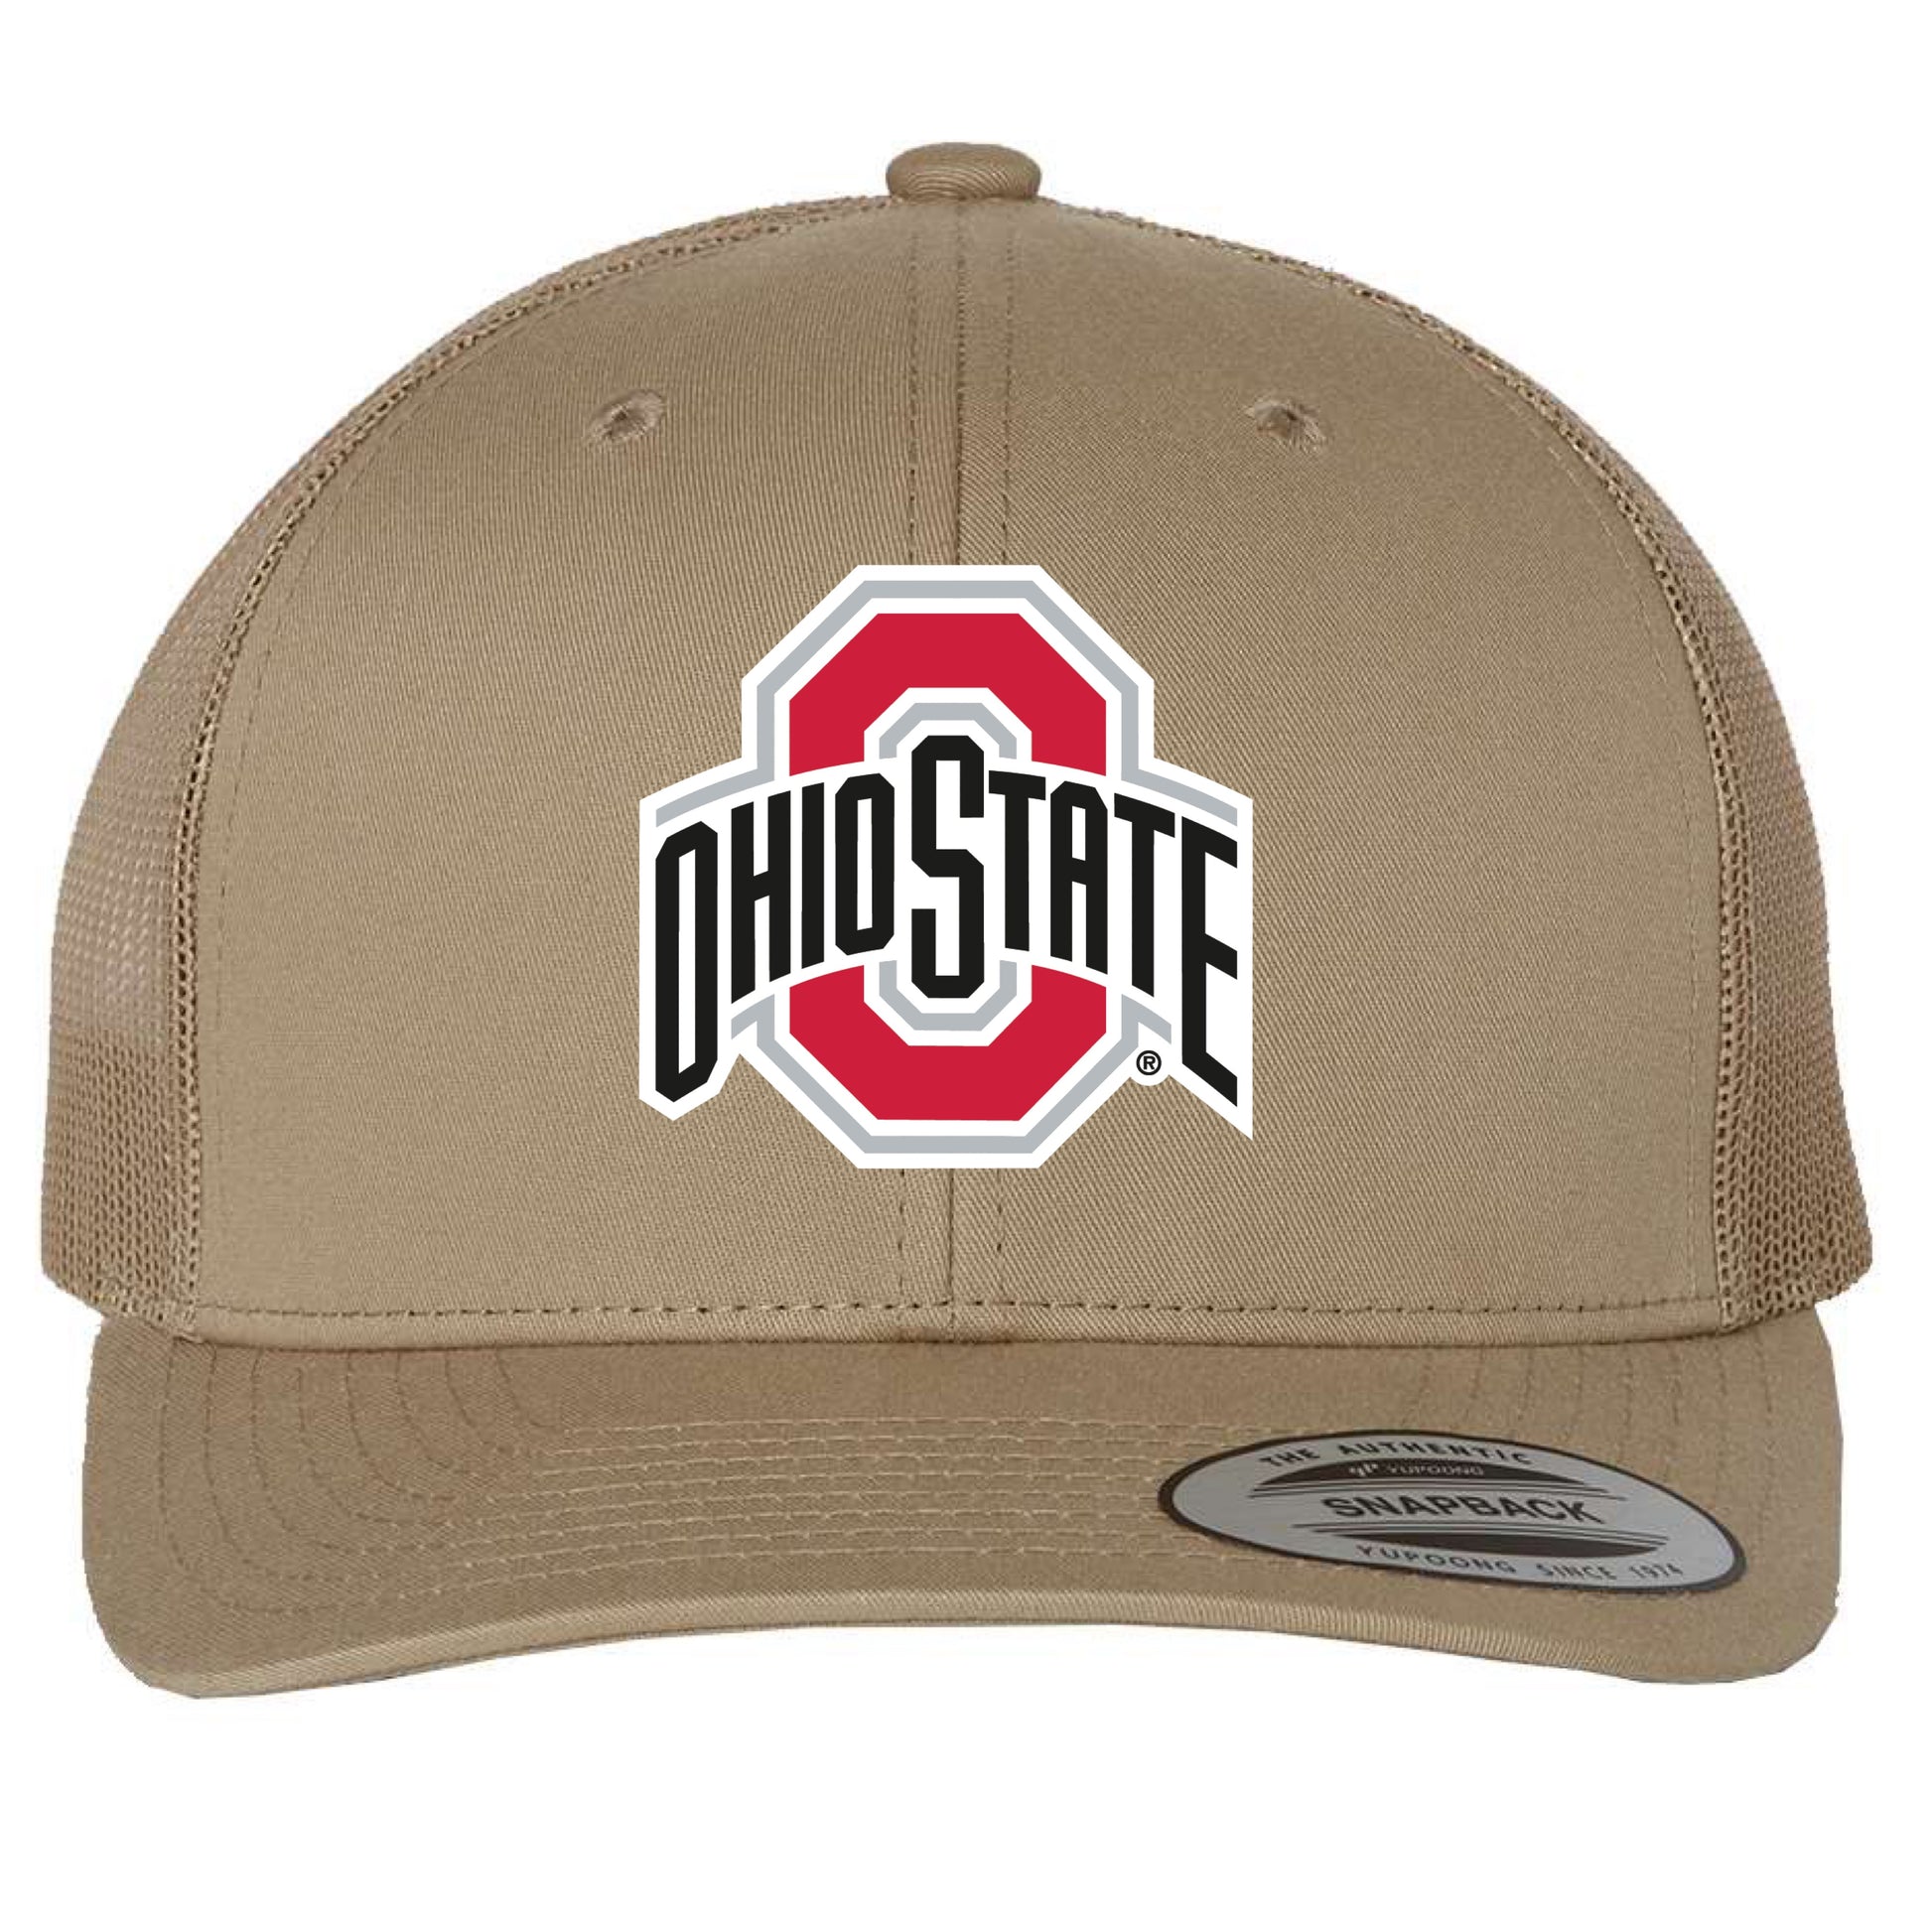 Ohio State Buckeyes 3D YP Snapback Trucker Hat- Khaki - Ten Gallon Hat Co.